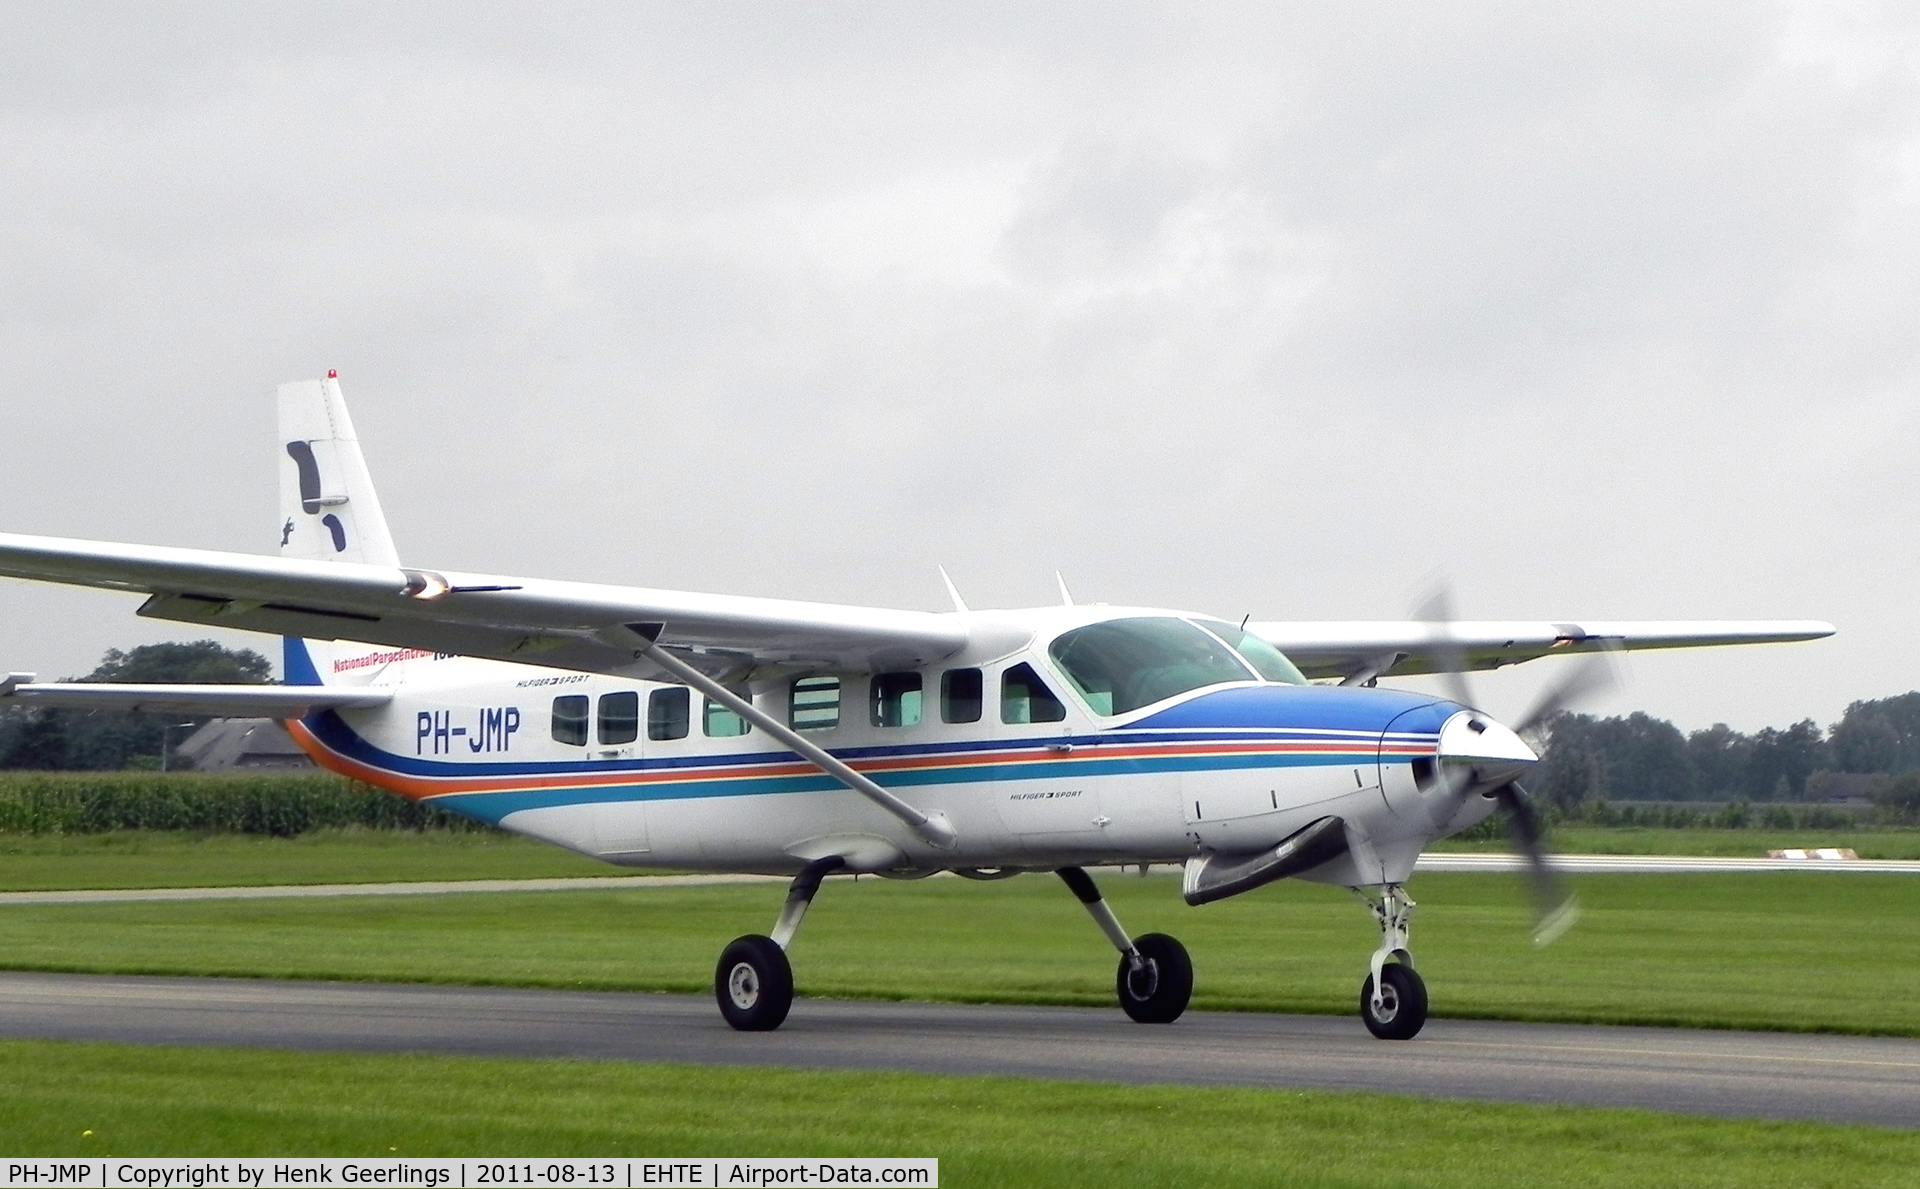 PH-JMP, 1997 Cessna 208B Supervan 900 C/N 208B-0583, Owner: Nationaal Parachutisten Centrum Teuge - National Para Center - Teuge